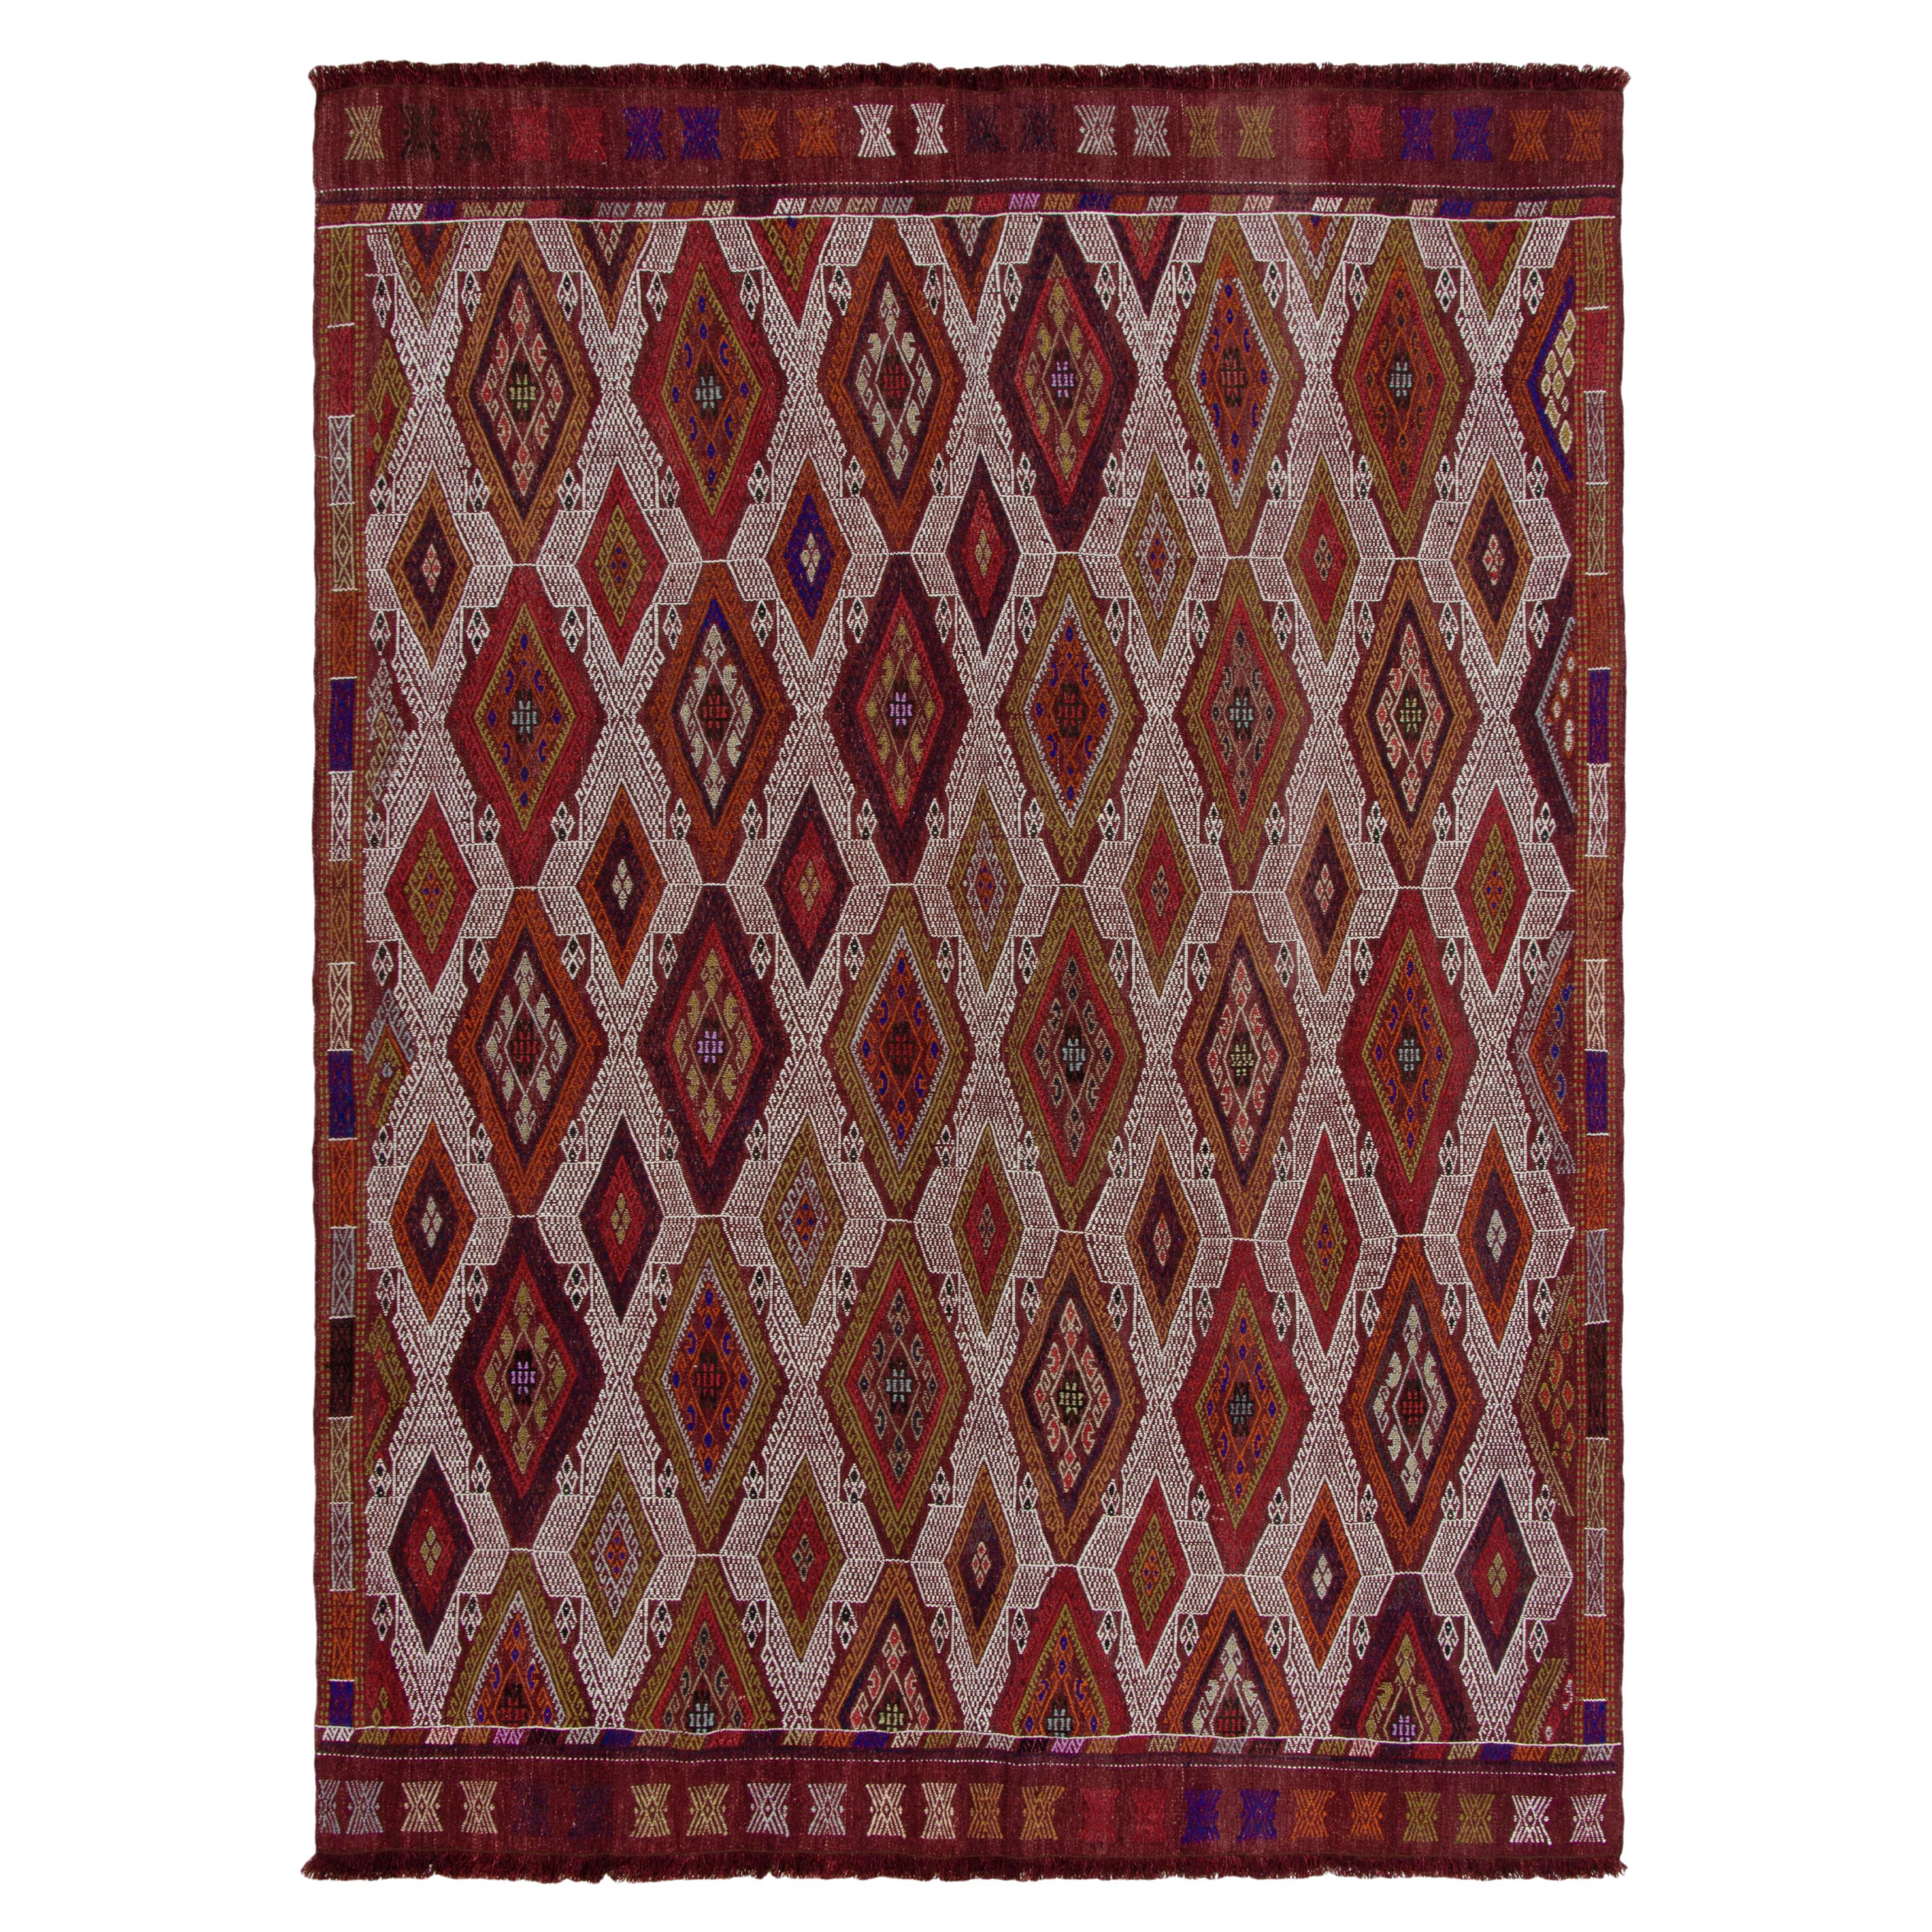 Vintage Embroidered Kilim Rug in Red, Brown Orange Tribal Pattern by Rug & Kilim For Sale